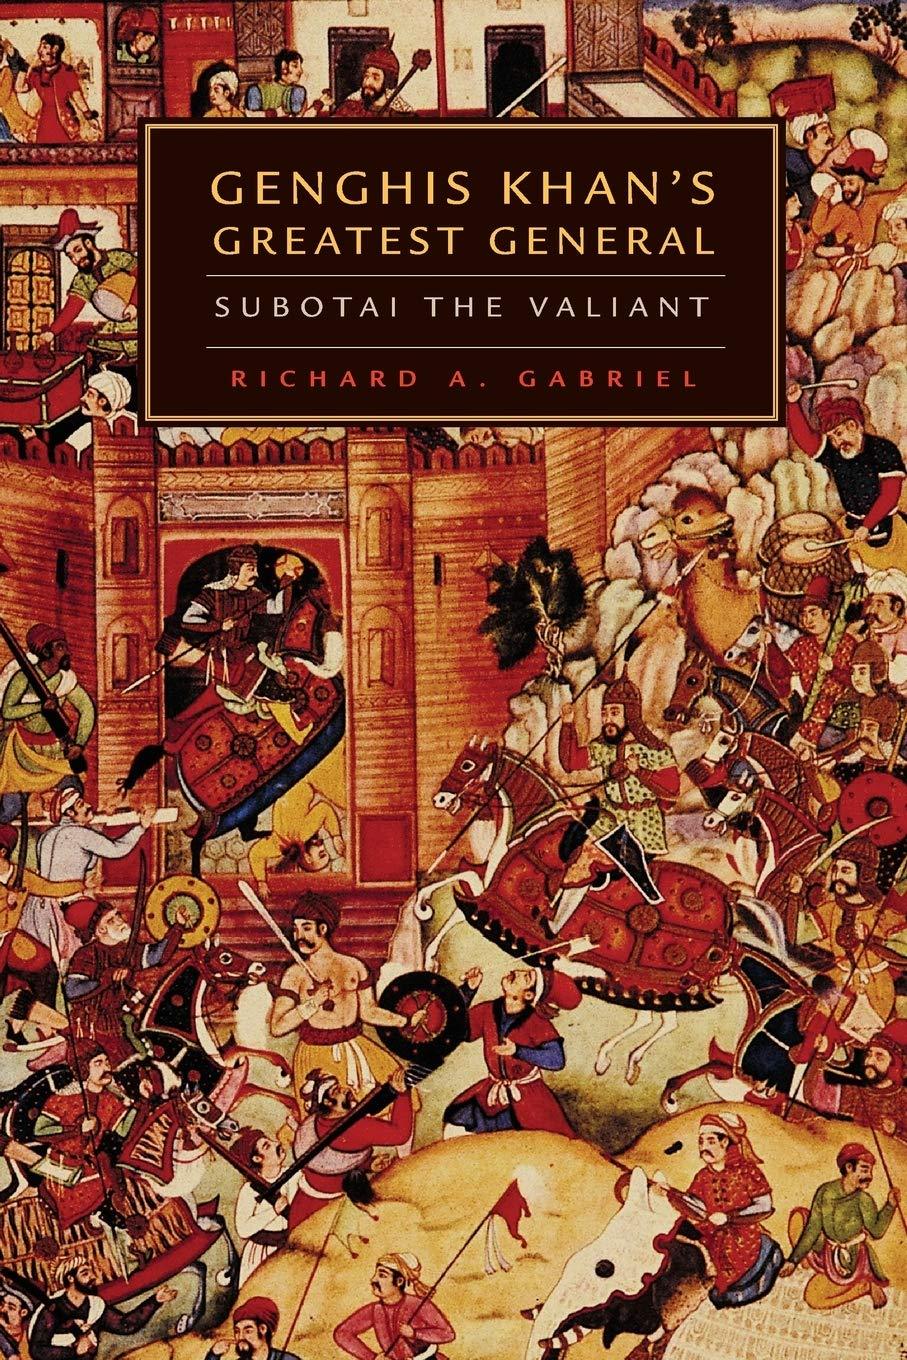 Genghis Khan's Greatest General by Richard A. Gabriel [Paperback] - LV'S Global Media